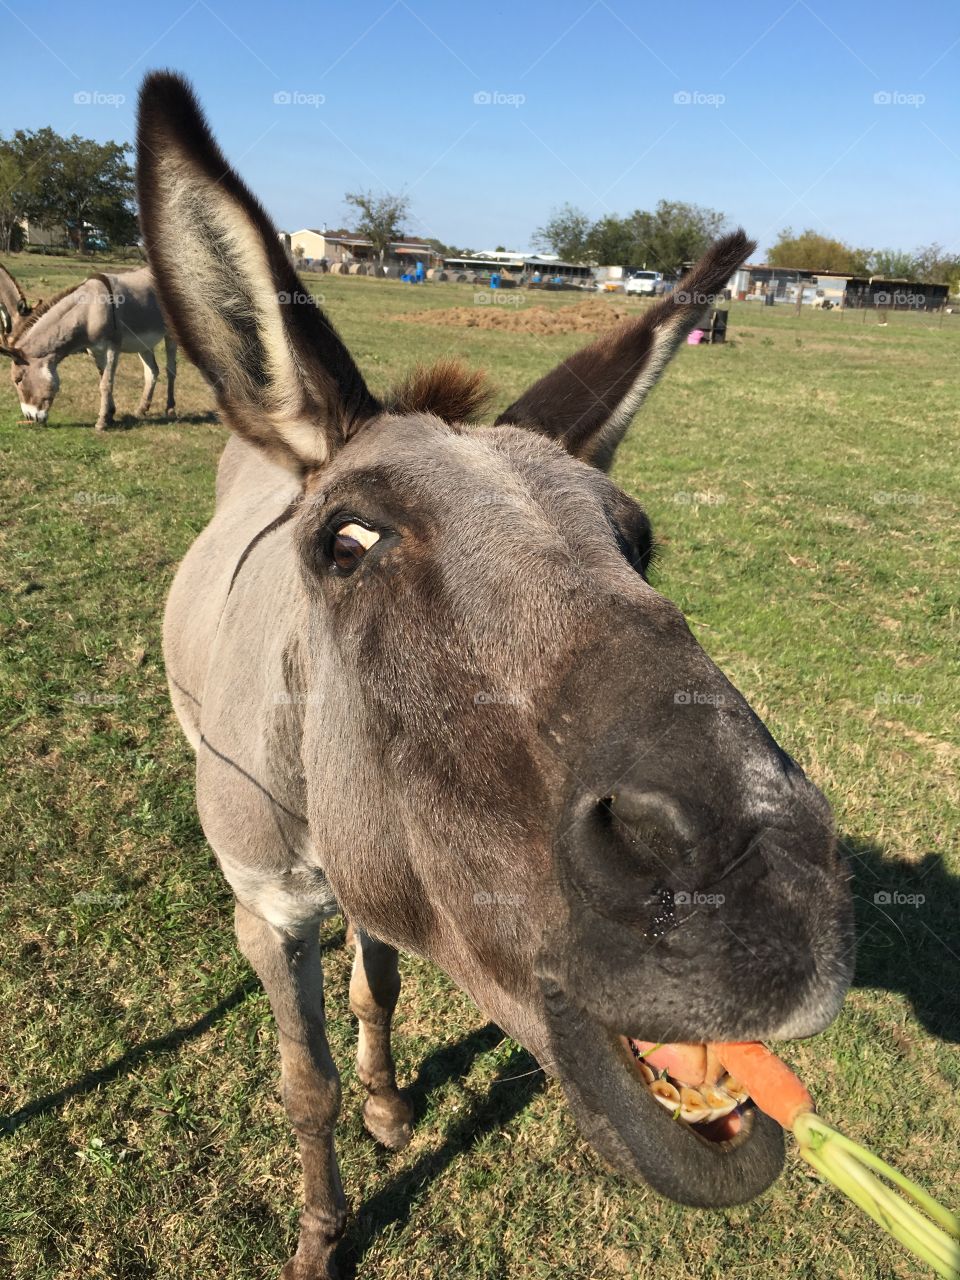 Donkey eating Carrot